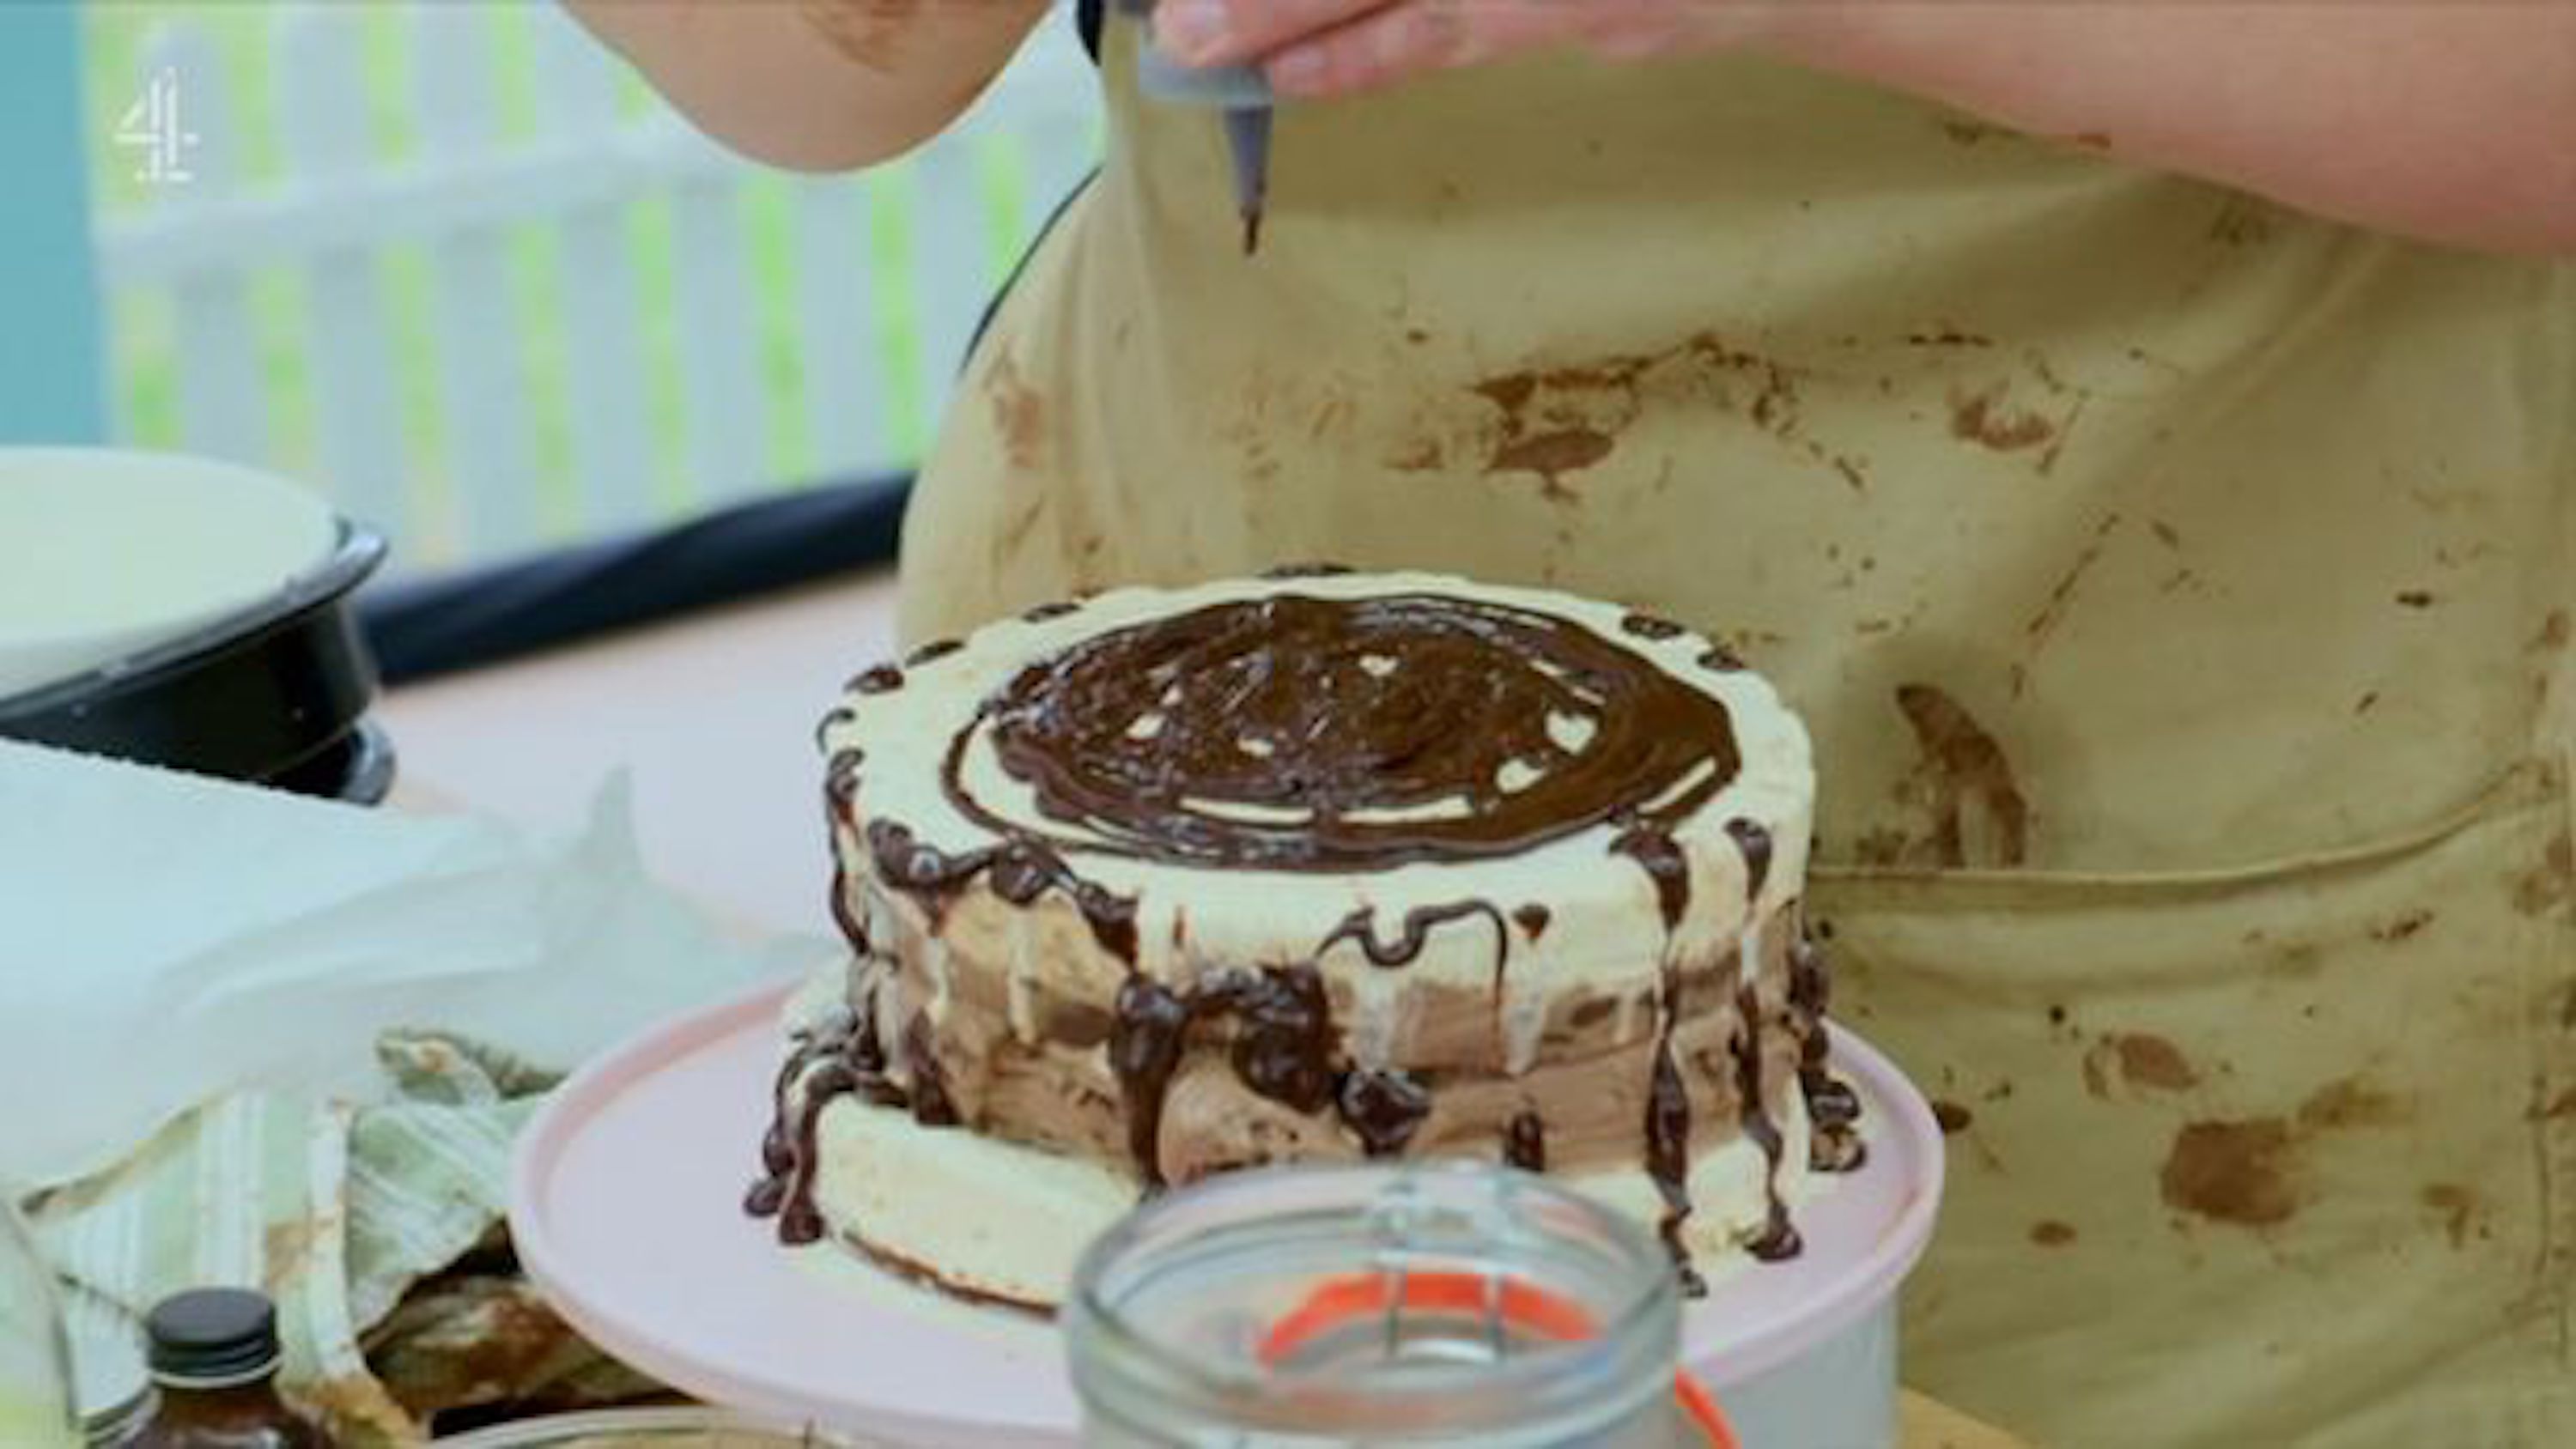 An ice cream cake made of chocolate melting on Great British Bake Off